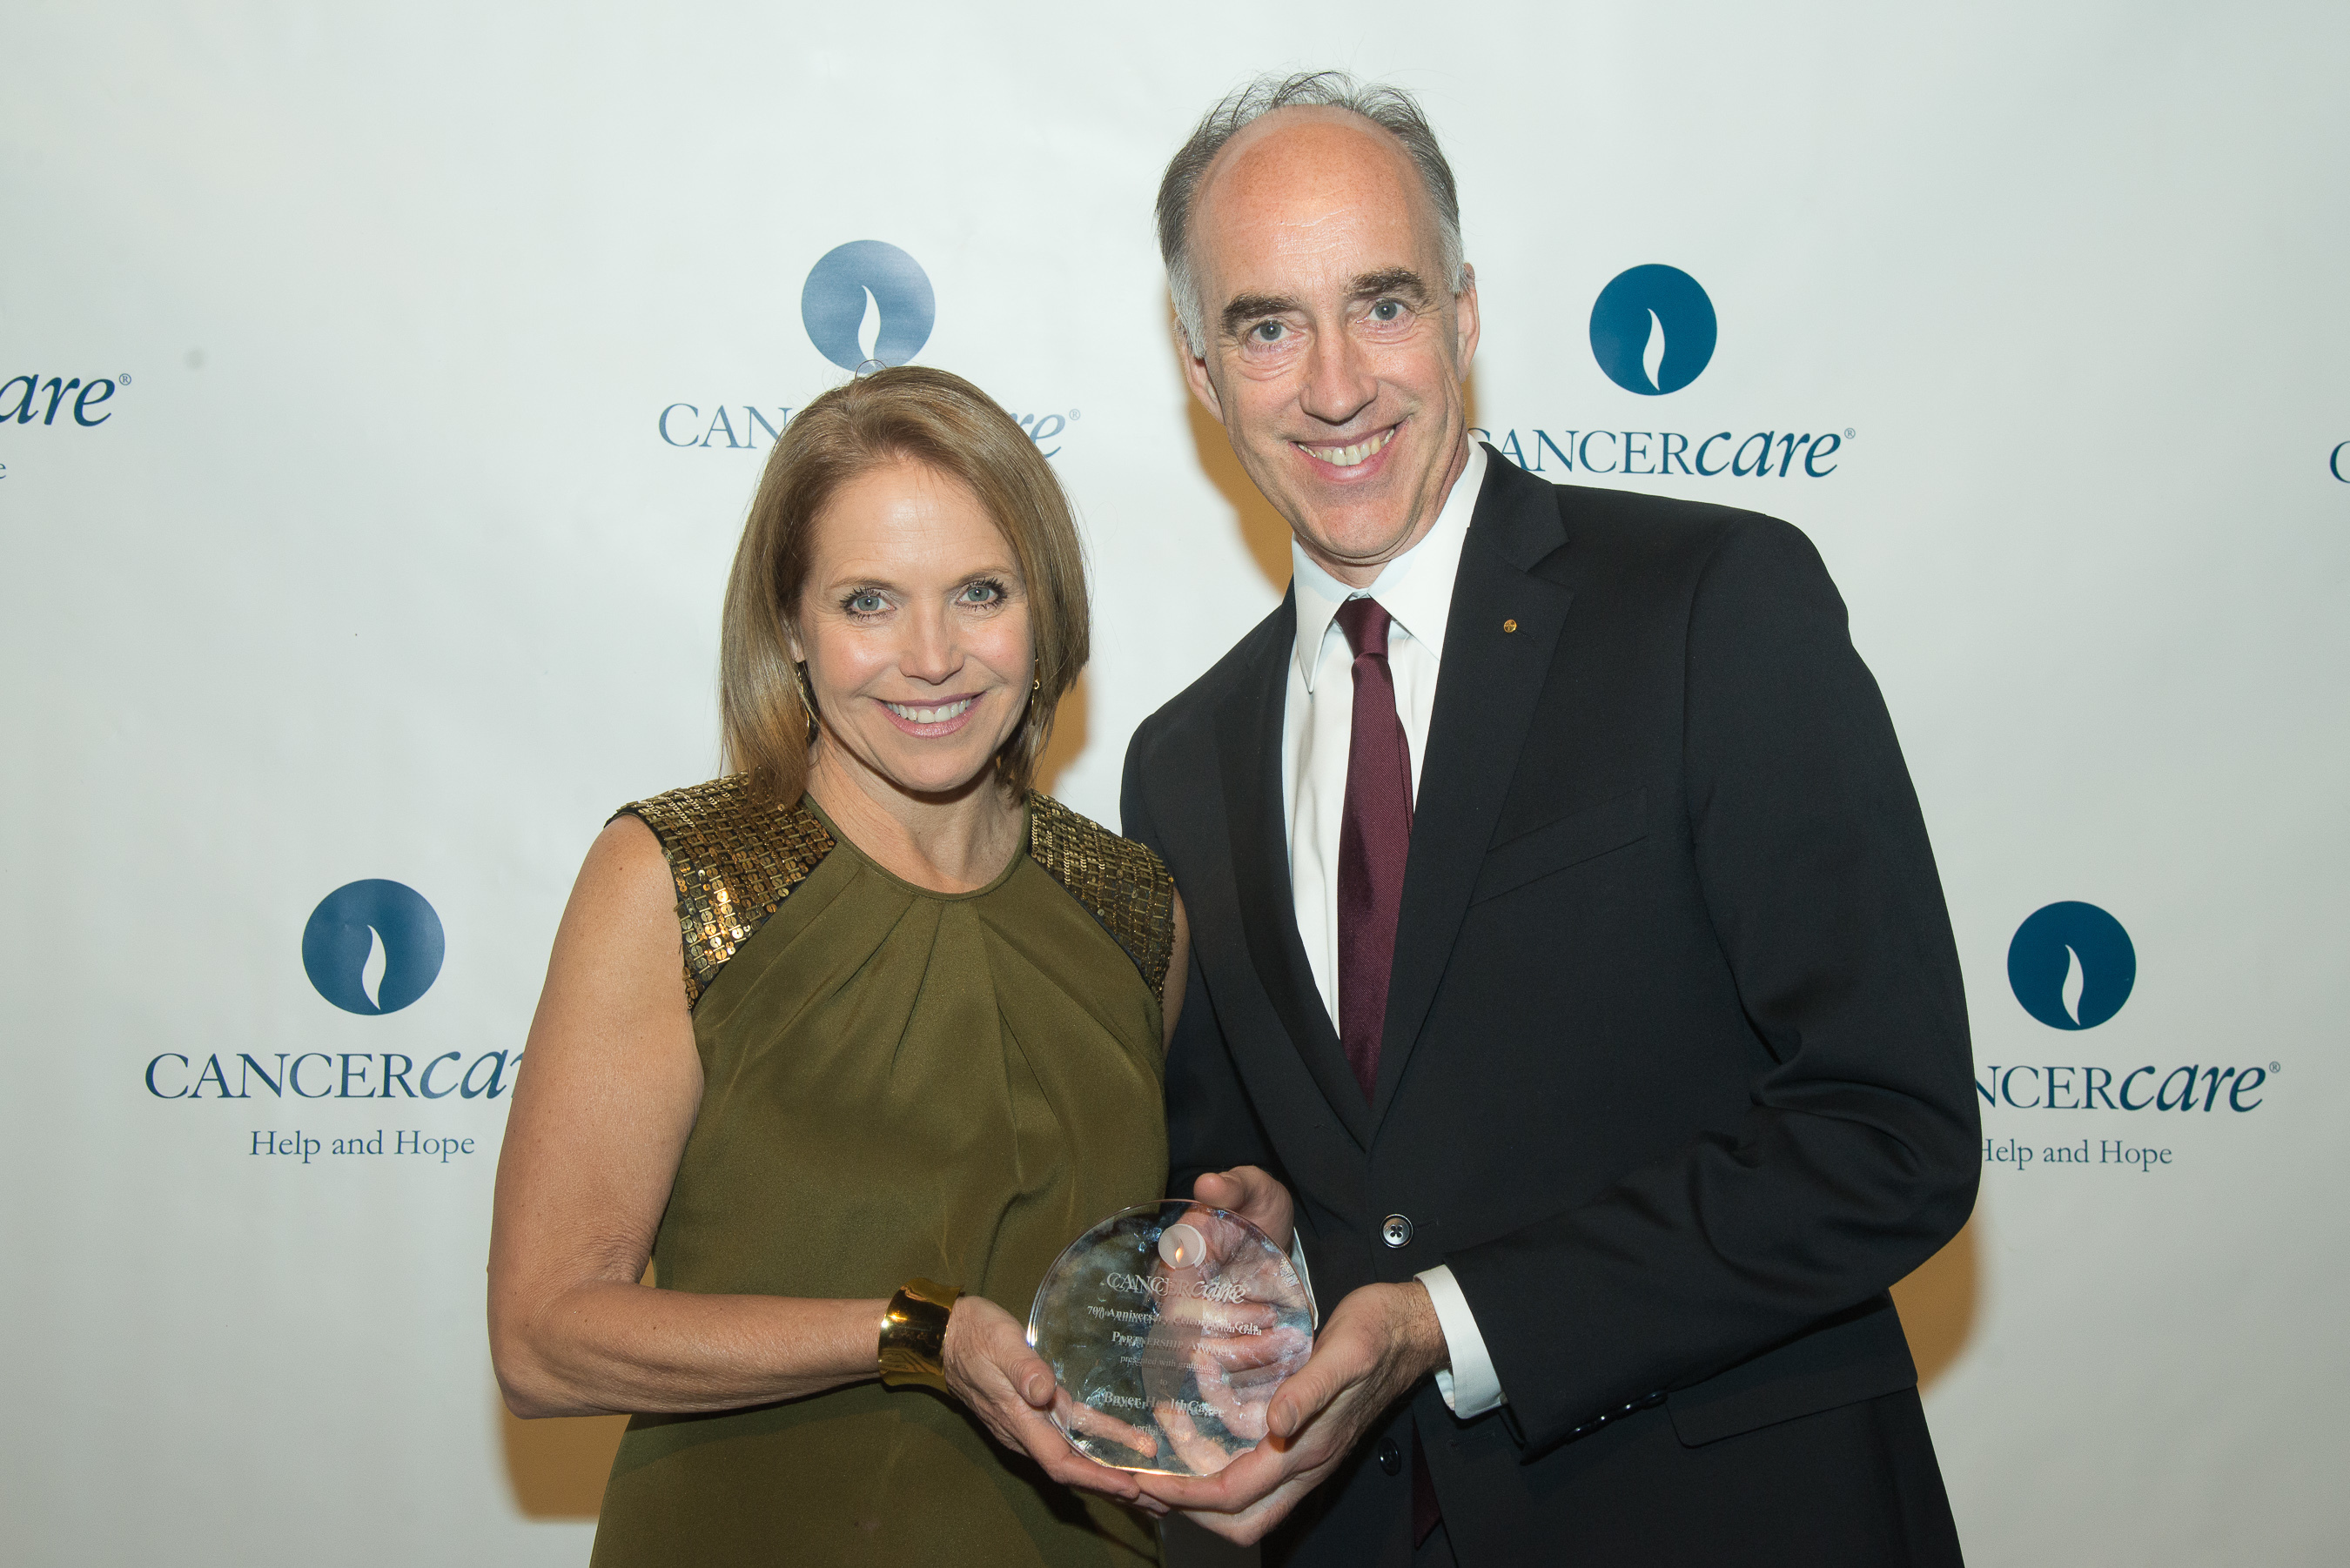 Bayer Receives CancerCare Award at 70th Anniversary Celebration Gala (PRNewsFoto/Bayer HealthCare)